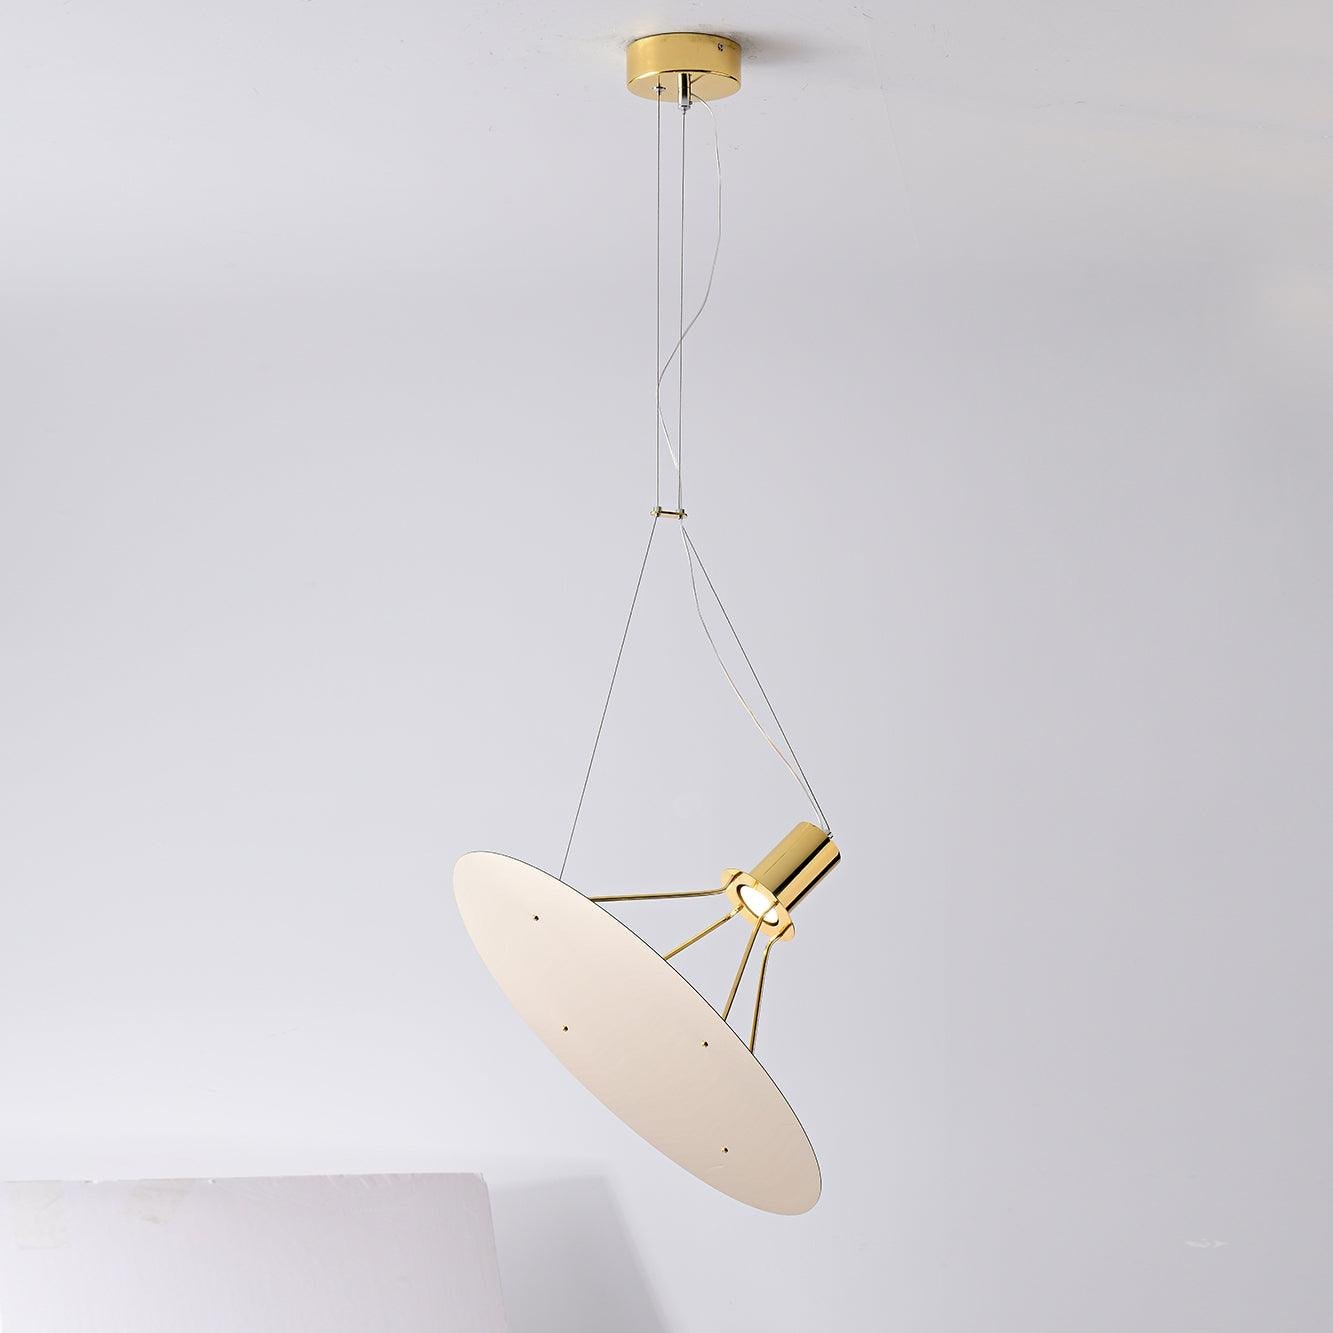 Amisol Pendant Lamp - Gold Finish, Cool White Light, 27.6" Diameter x 15.7" Height (70cm x 40cm)